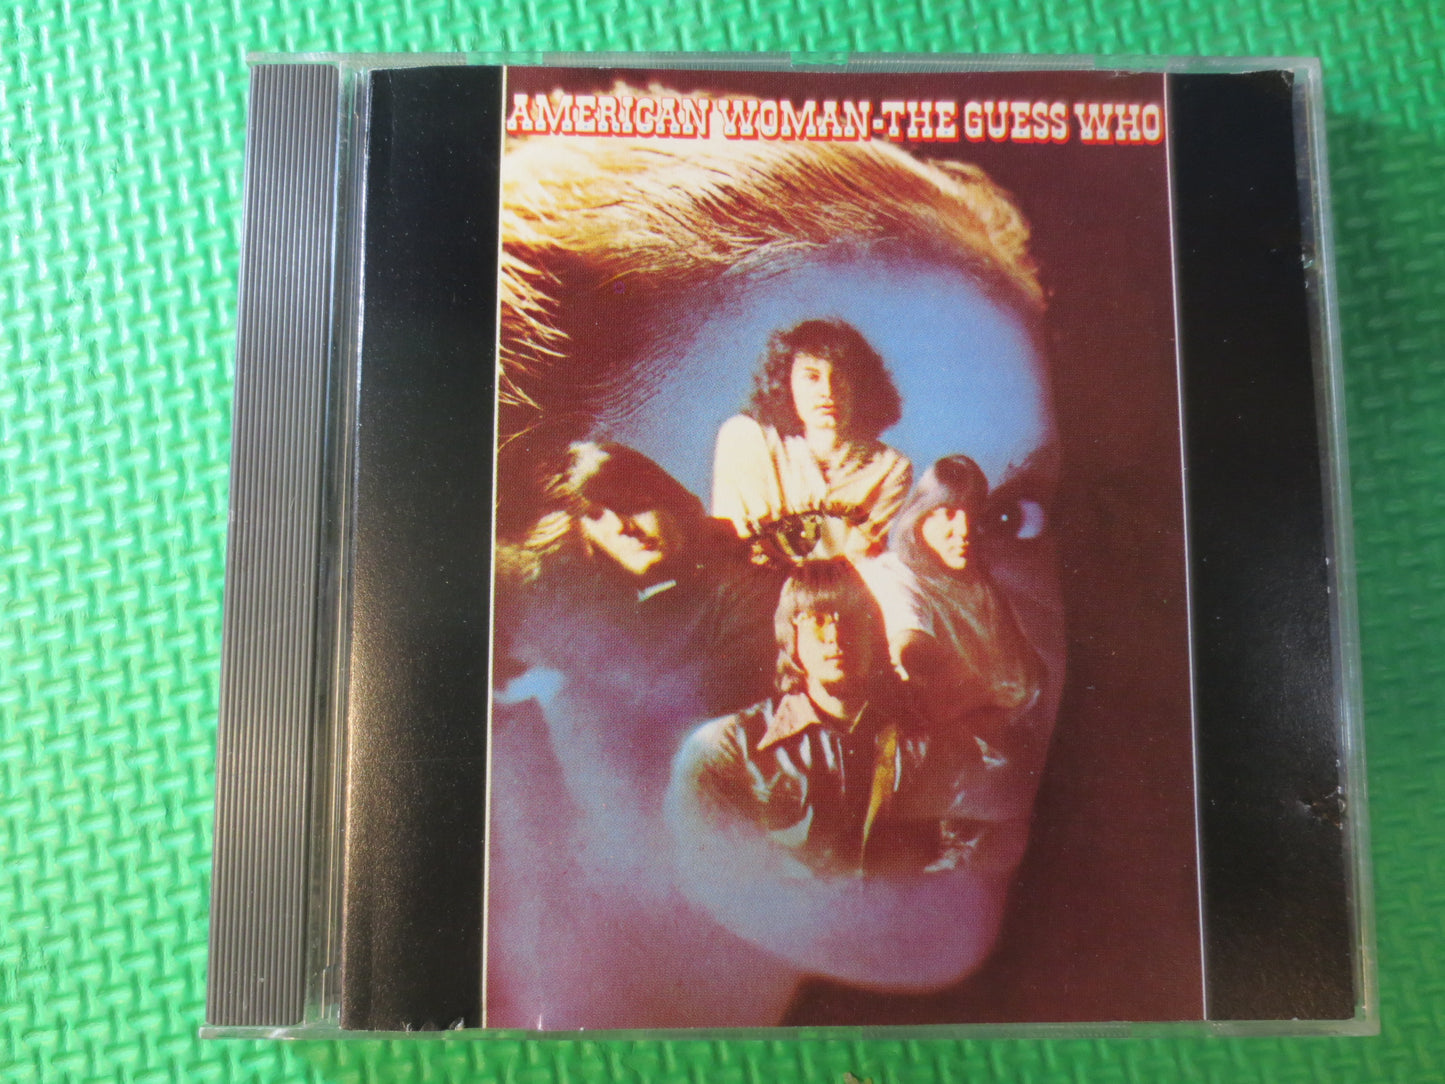 The GUESS WHO Cd, The Guess Who Music, The Guess Who Song, Pop Music Cd, Rock Cd, Music Cd, Vintage Rock, 1988 Compact Discs